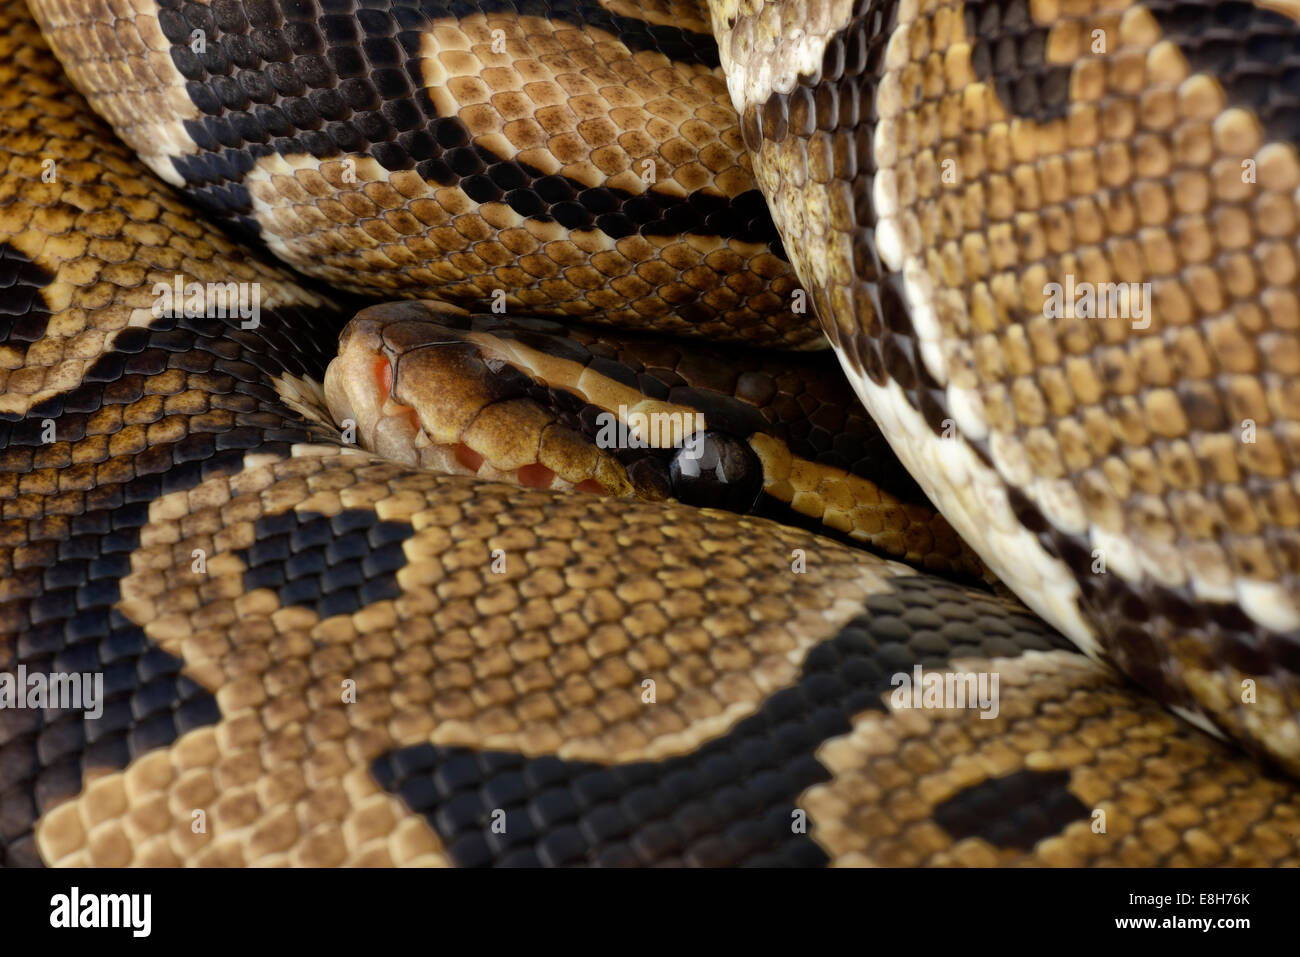 Royal Python, Python regius, partial view Stock Photo